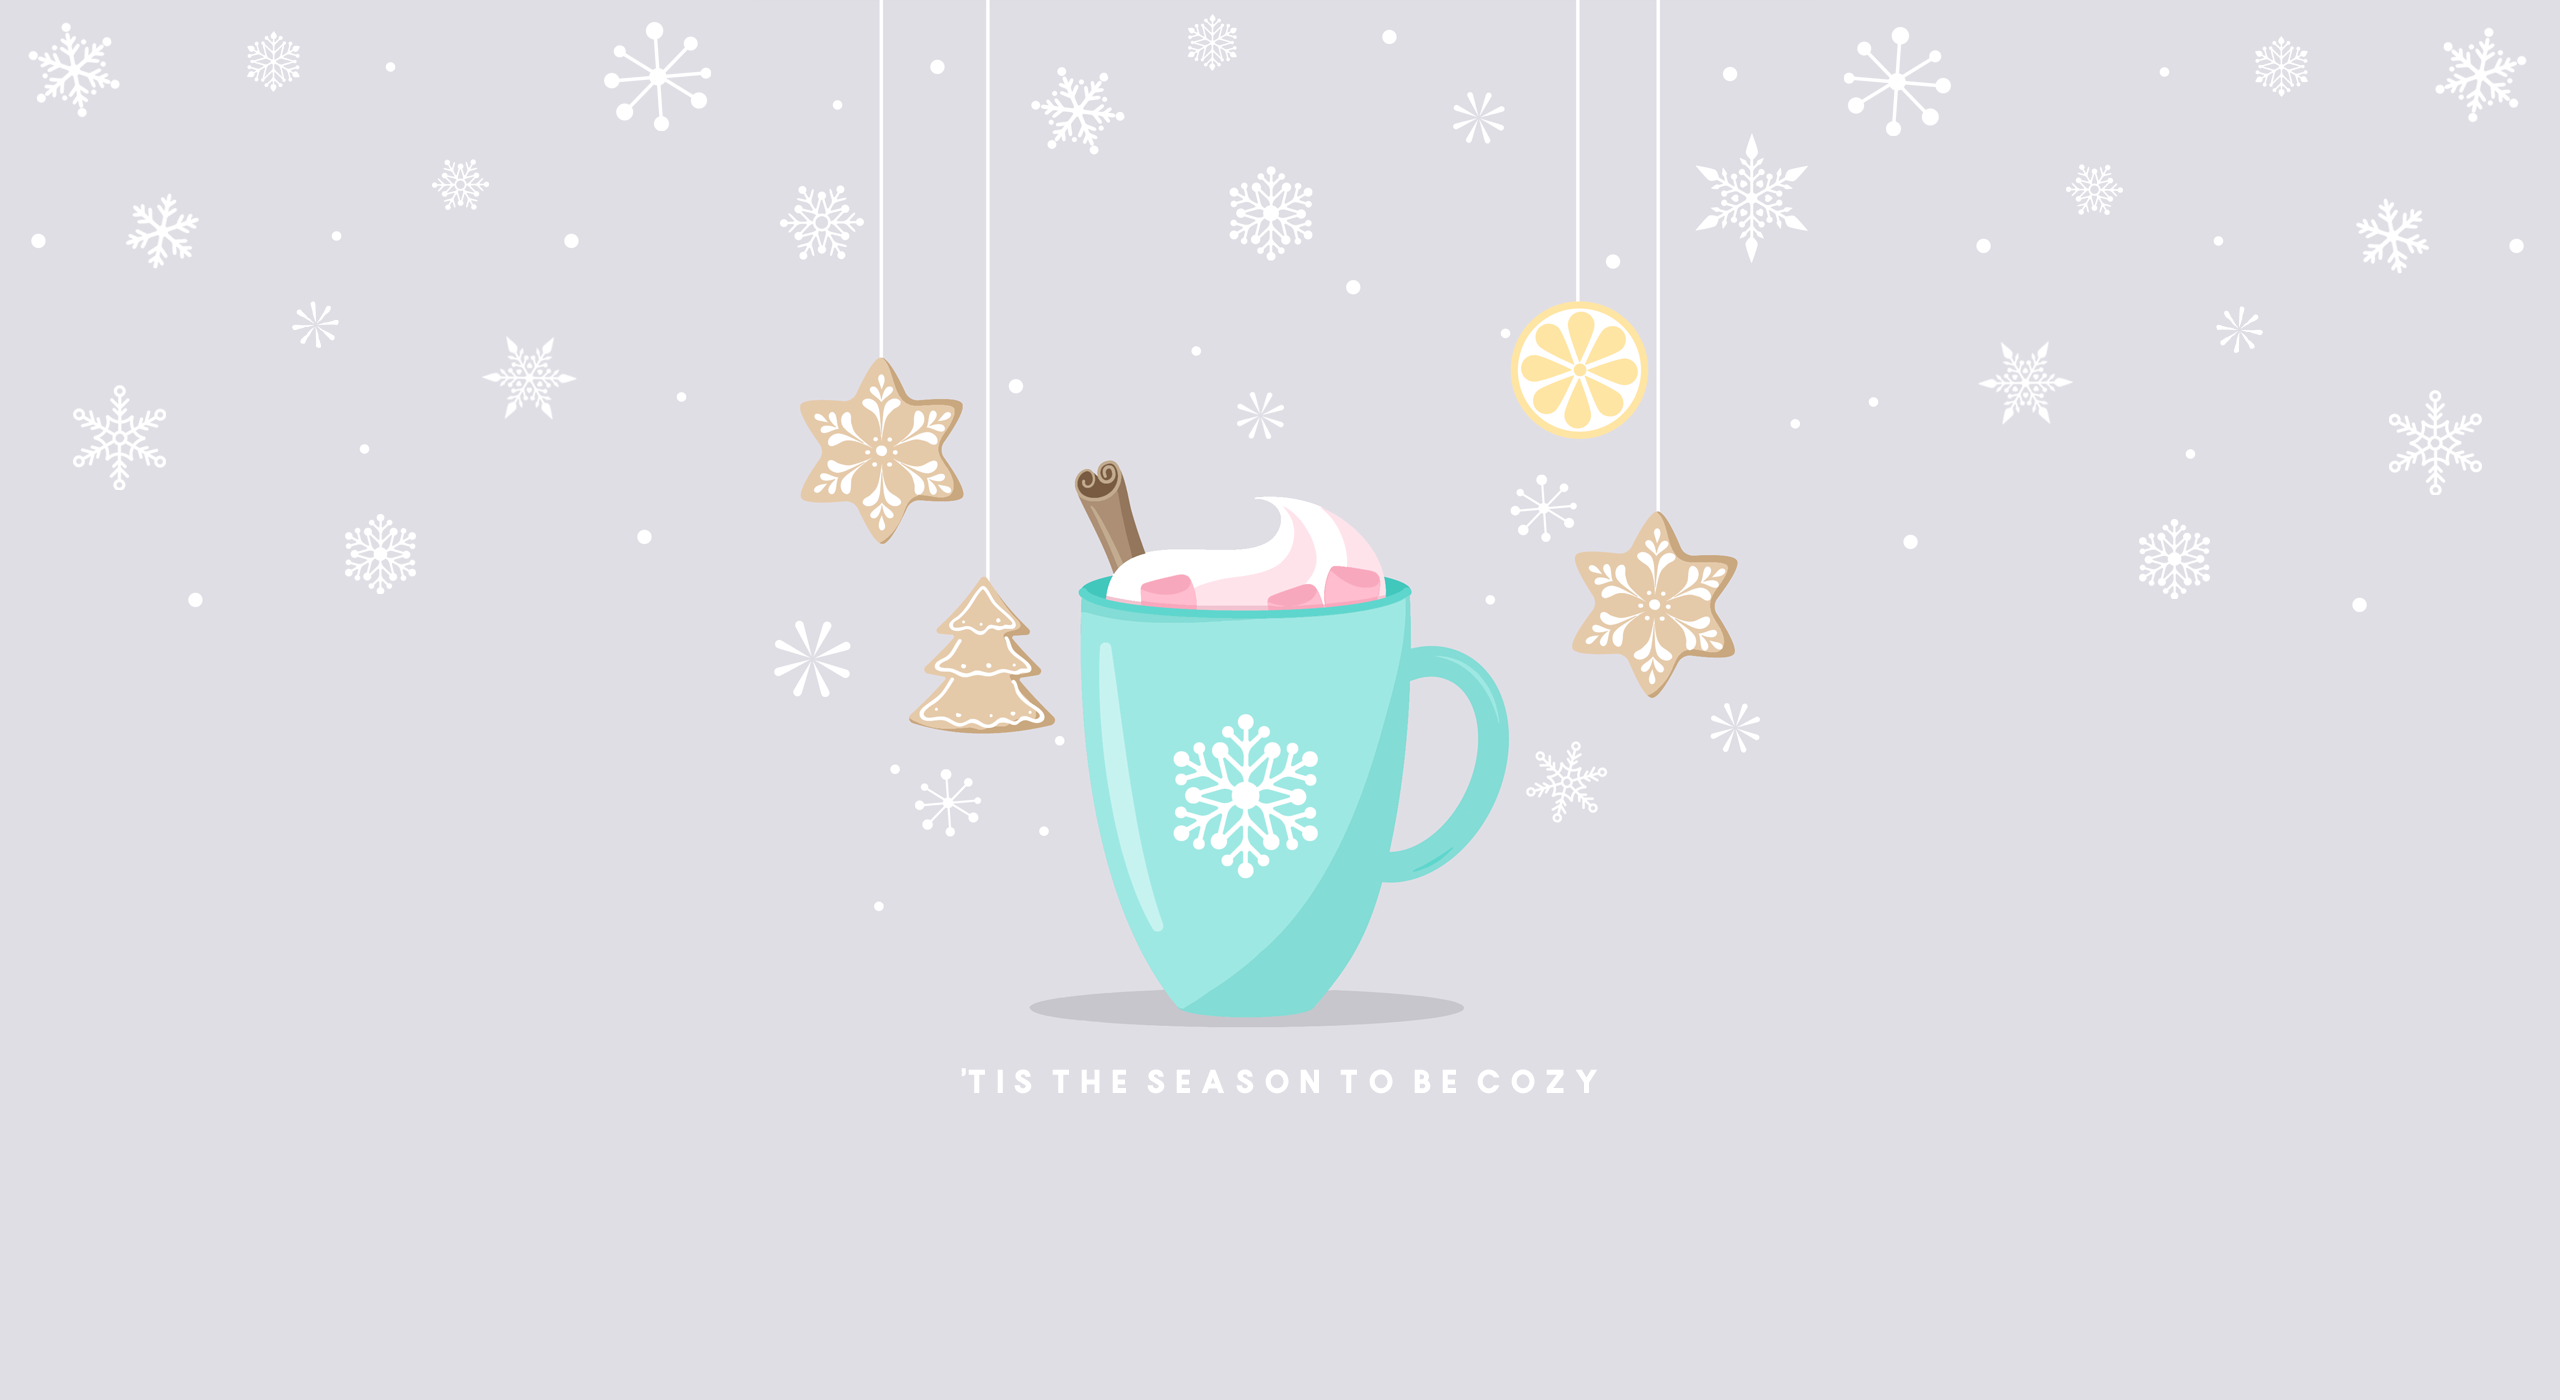 Wallpaper: 'Tis The Season To Be Cozy. Christmas desktop wallpaper, Winter wallpaper desktop, Winter wallpaper